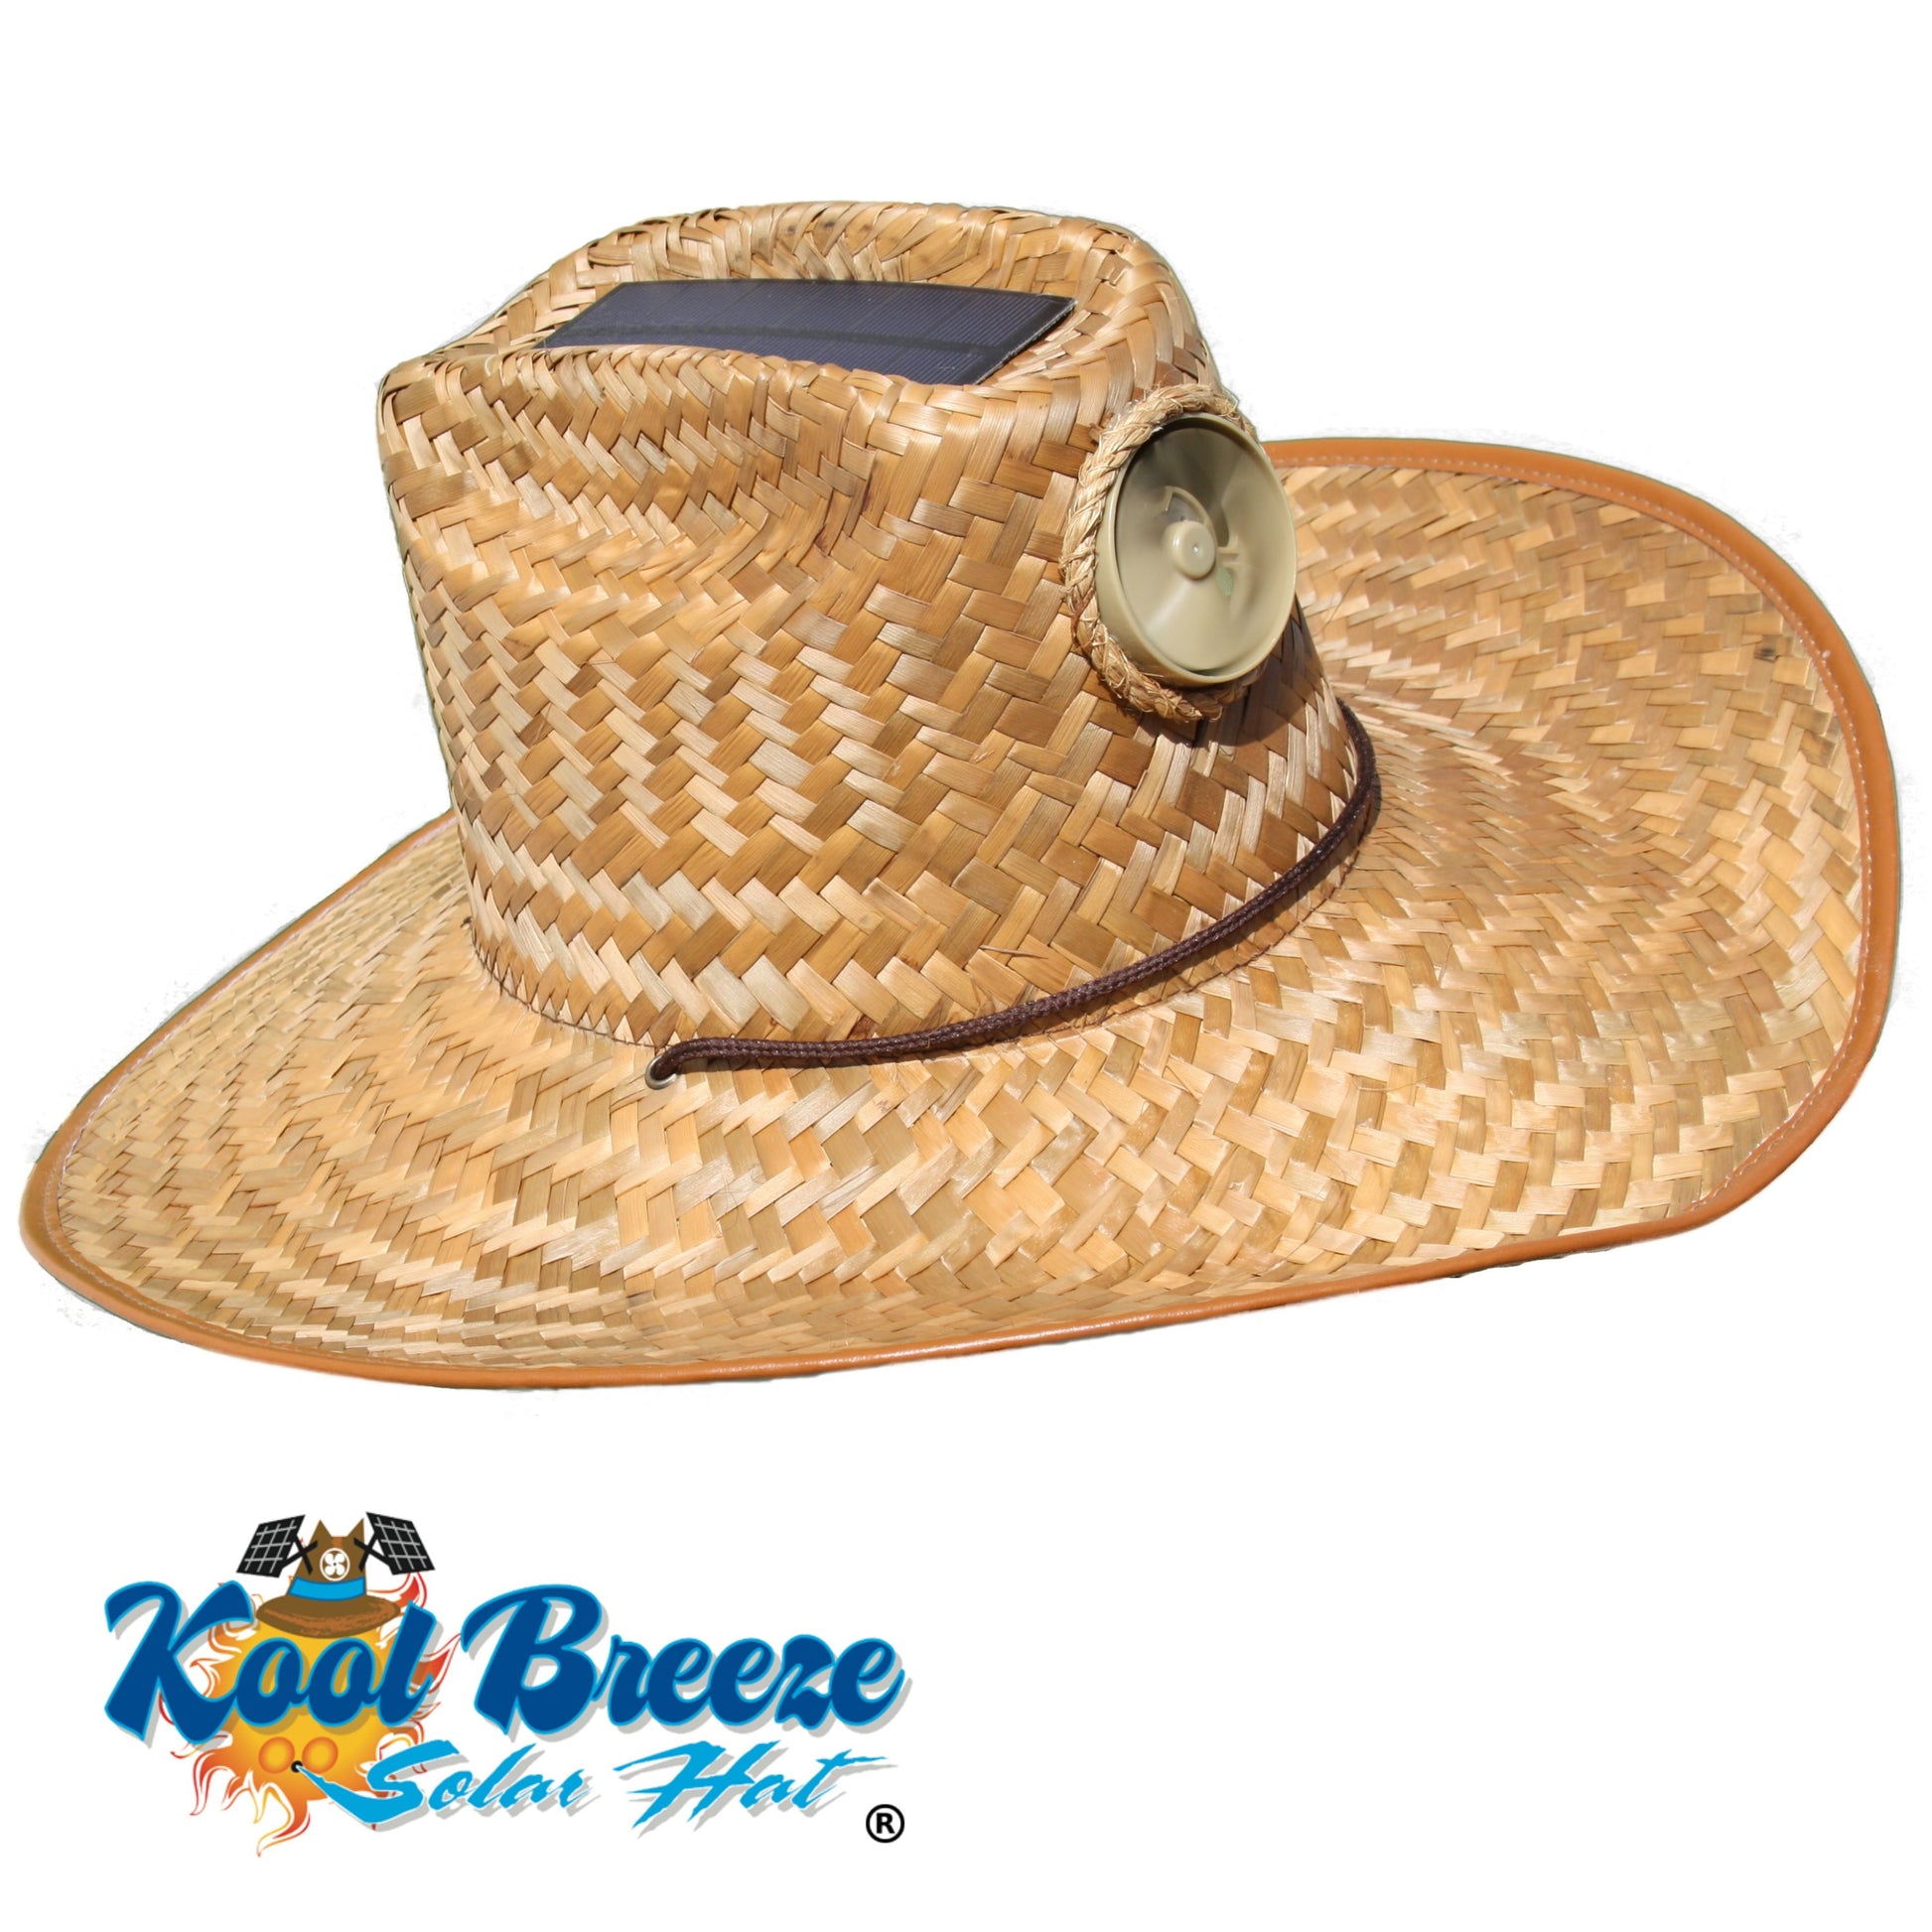 Wearing the Cowboy Straw hat with solar powered fan by Kool Breeze